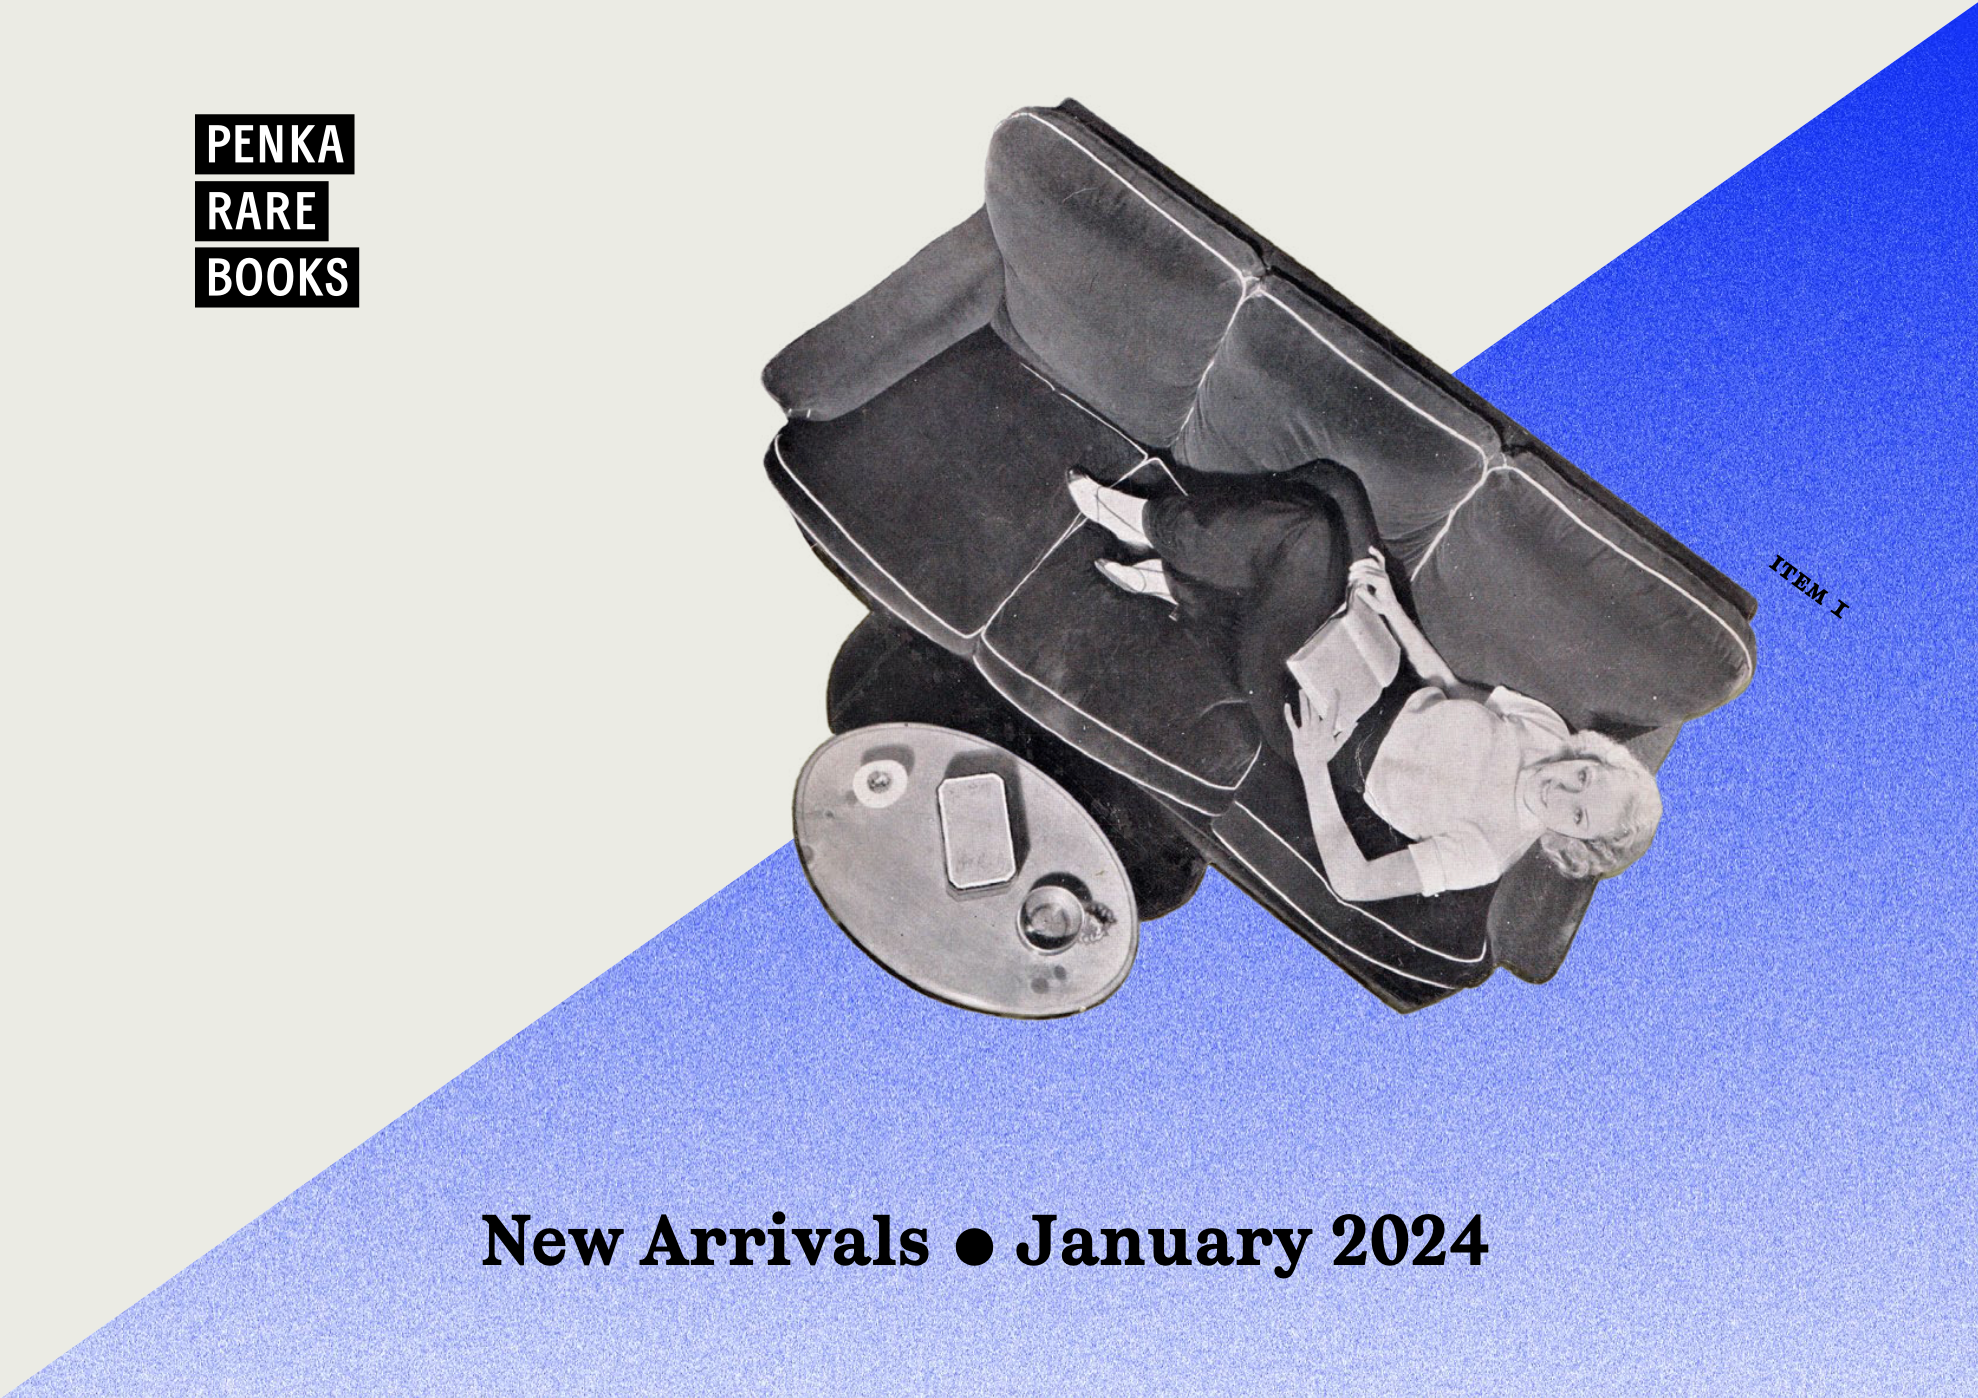 New Arrivals, January 2024